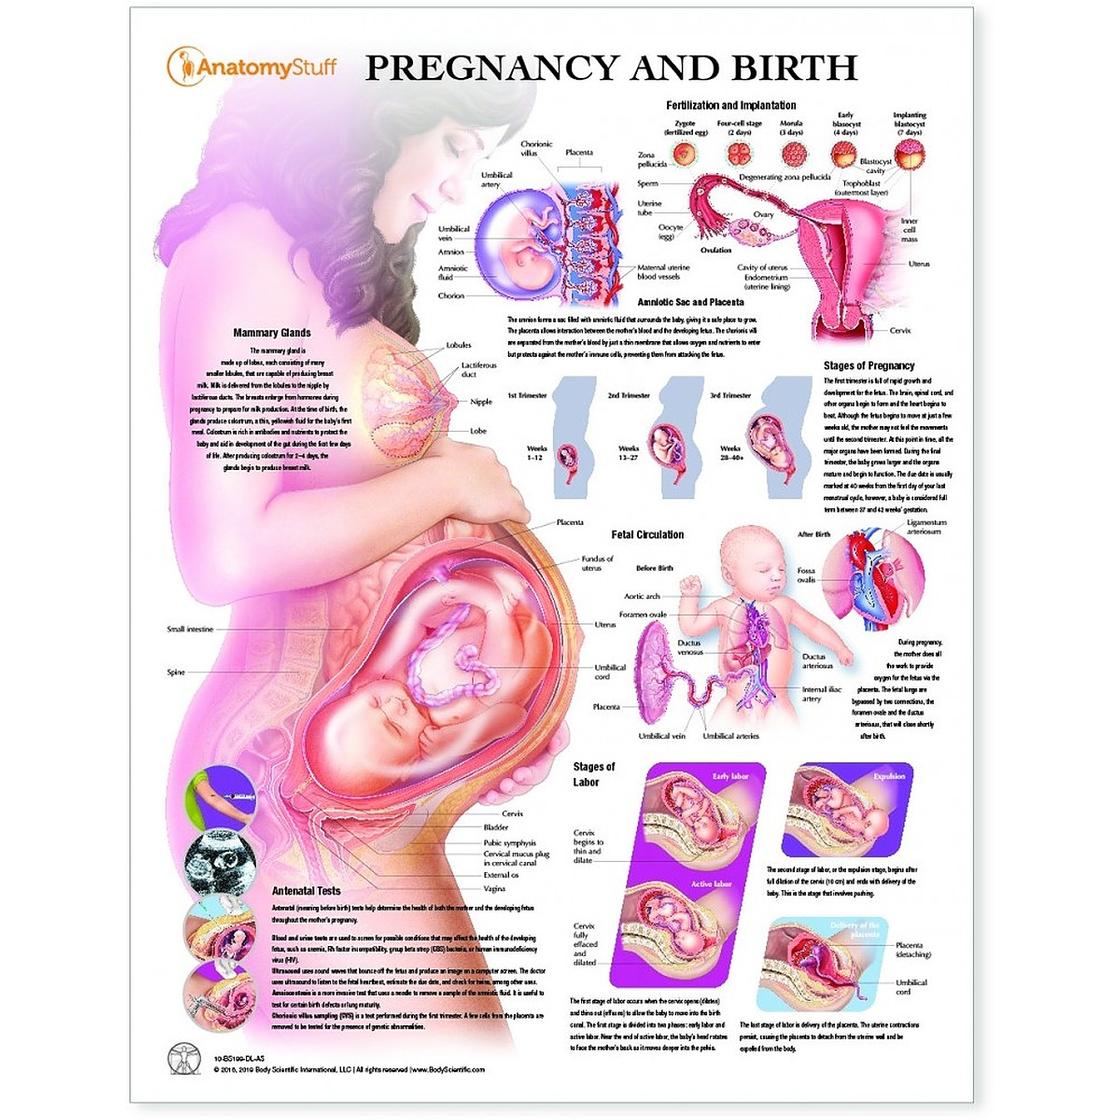 32 неделя ощущения. Положение ребенка в животе на 33 неделе беременности. Плод в животе матери схема. Положение органов на 32 неделе беременности. Эмбрион 34 недели беременности вес плода.